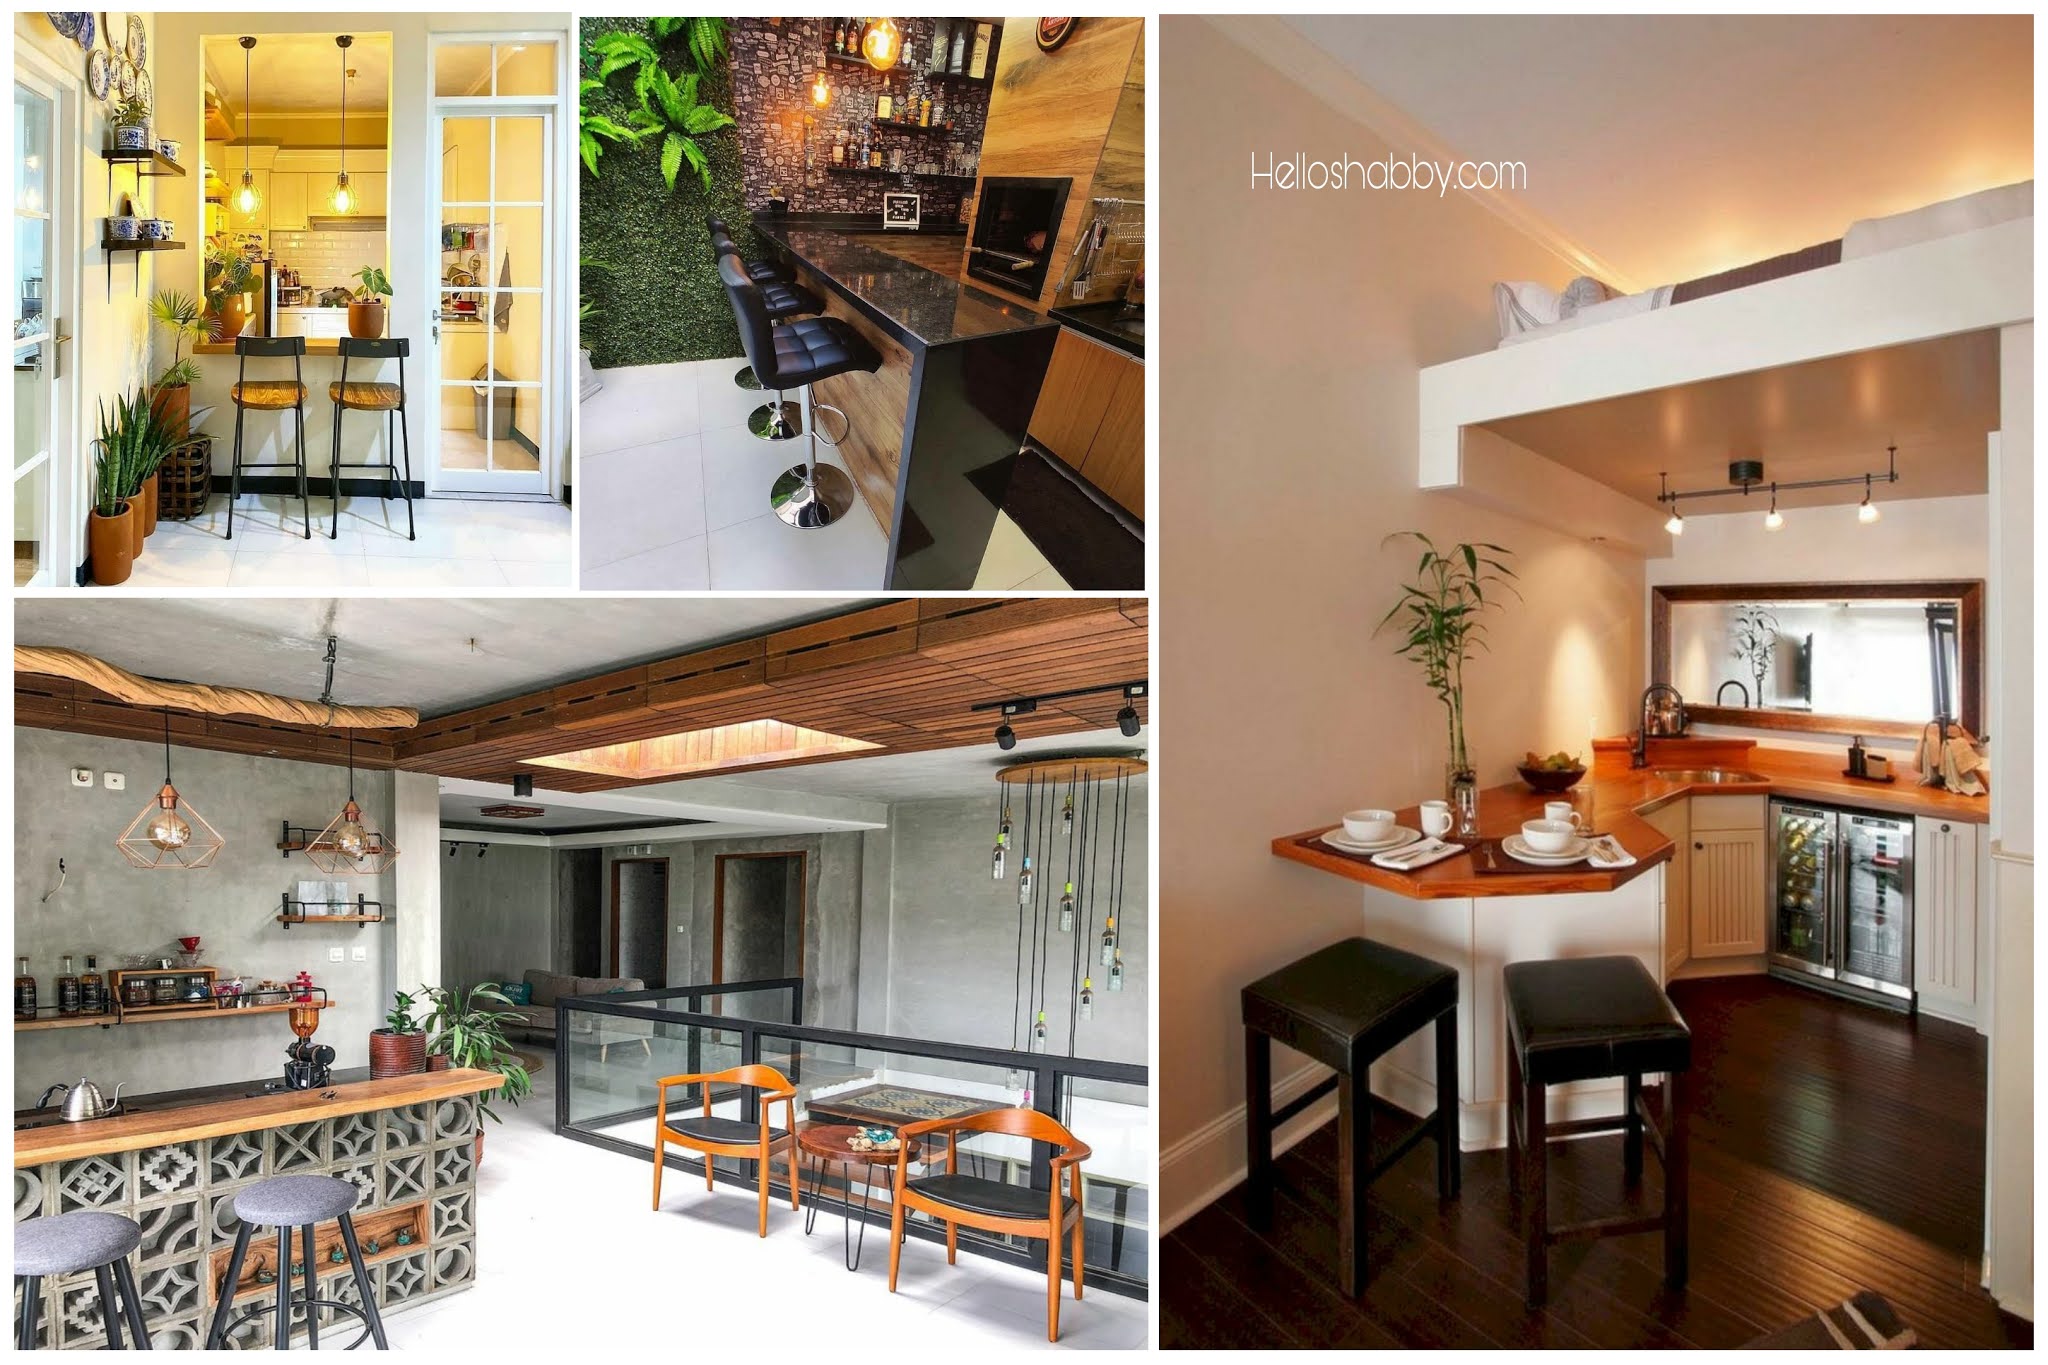 6 Inspirasi Desain Dapur Minimalis Ukuran Kecil Ala Cafe HelloShabbycom Interior And Exterior Solutions